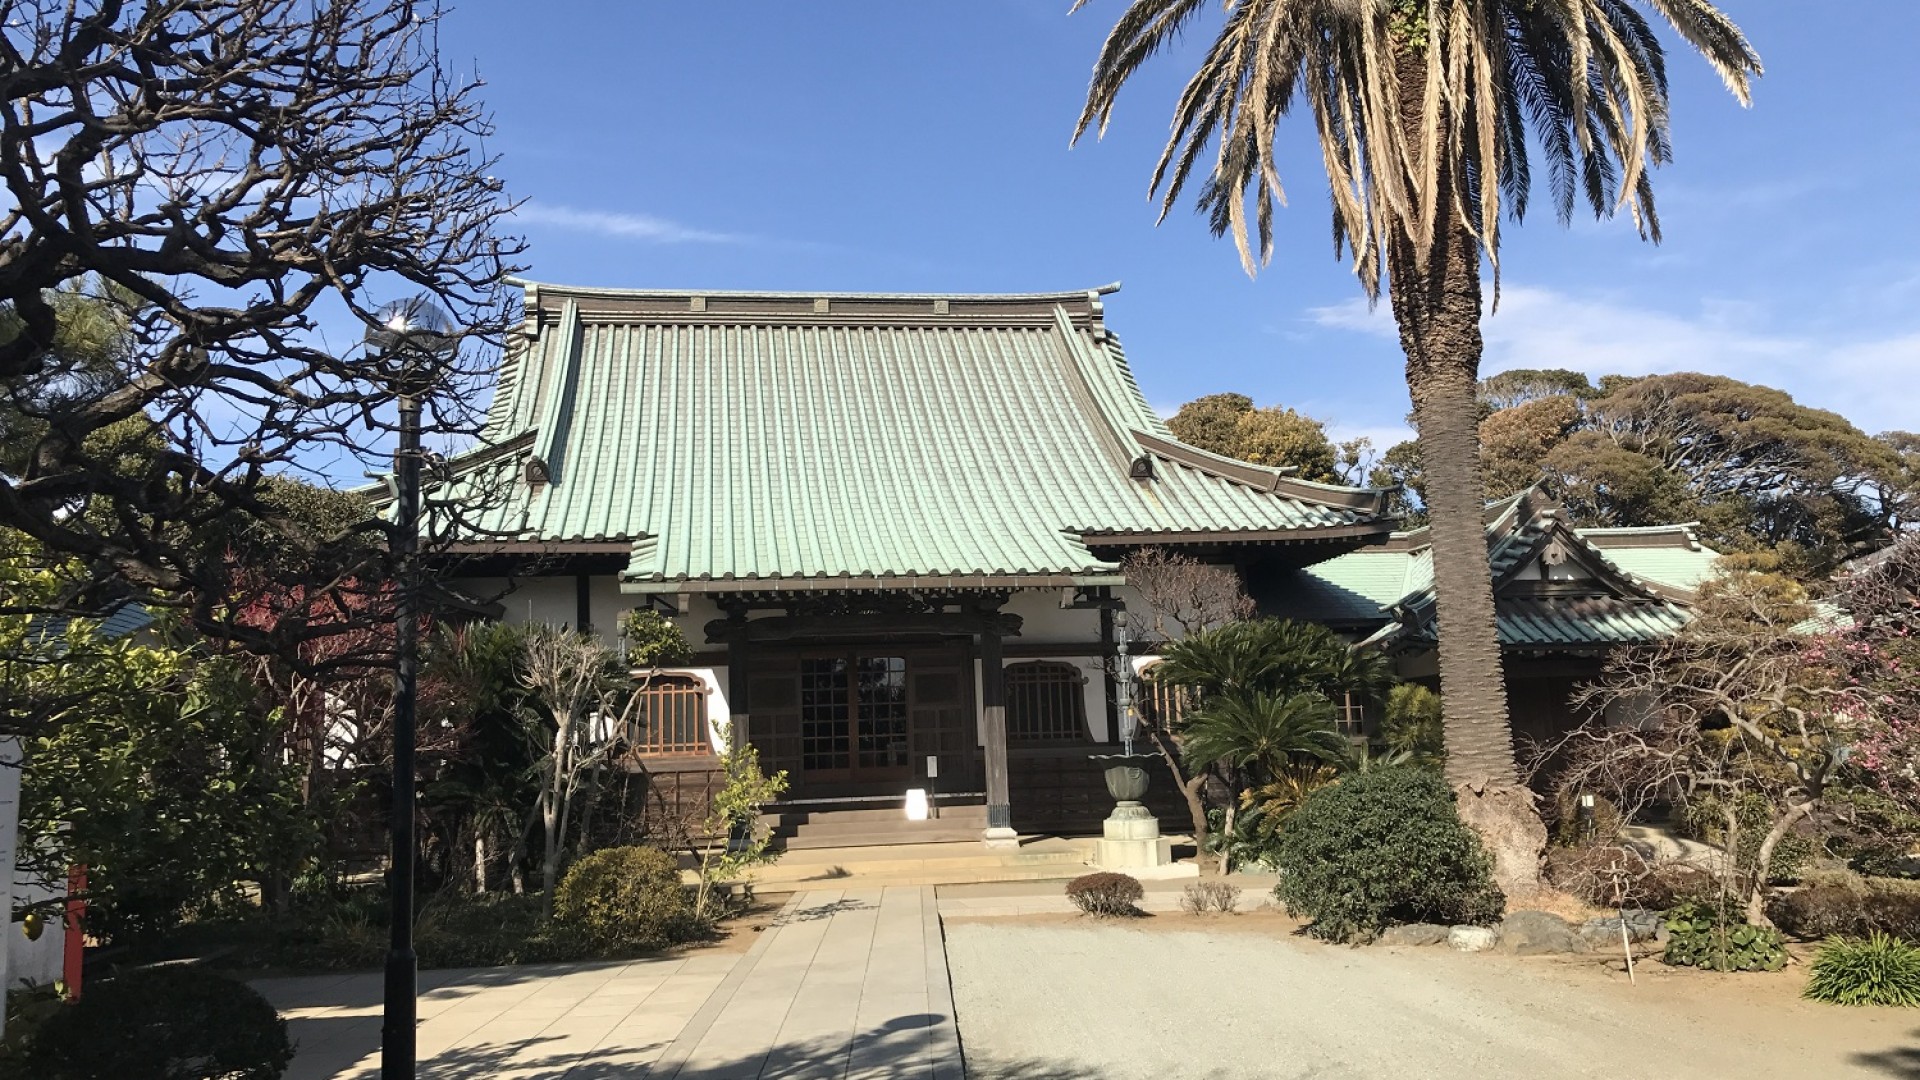 Le temple Honzuiji